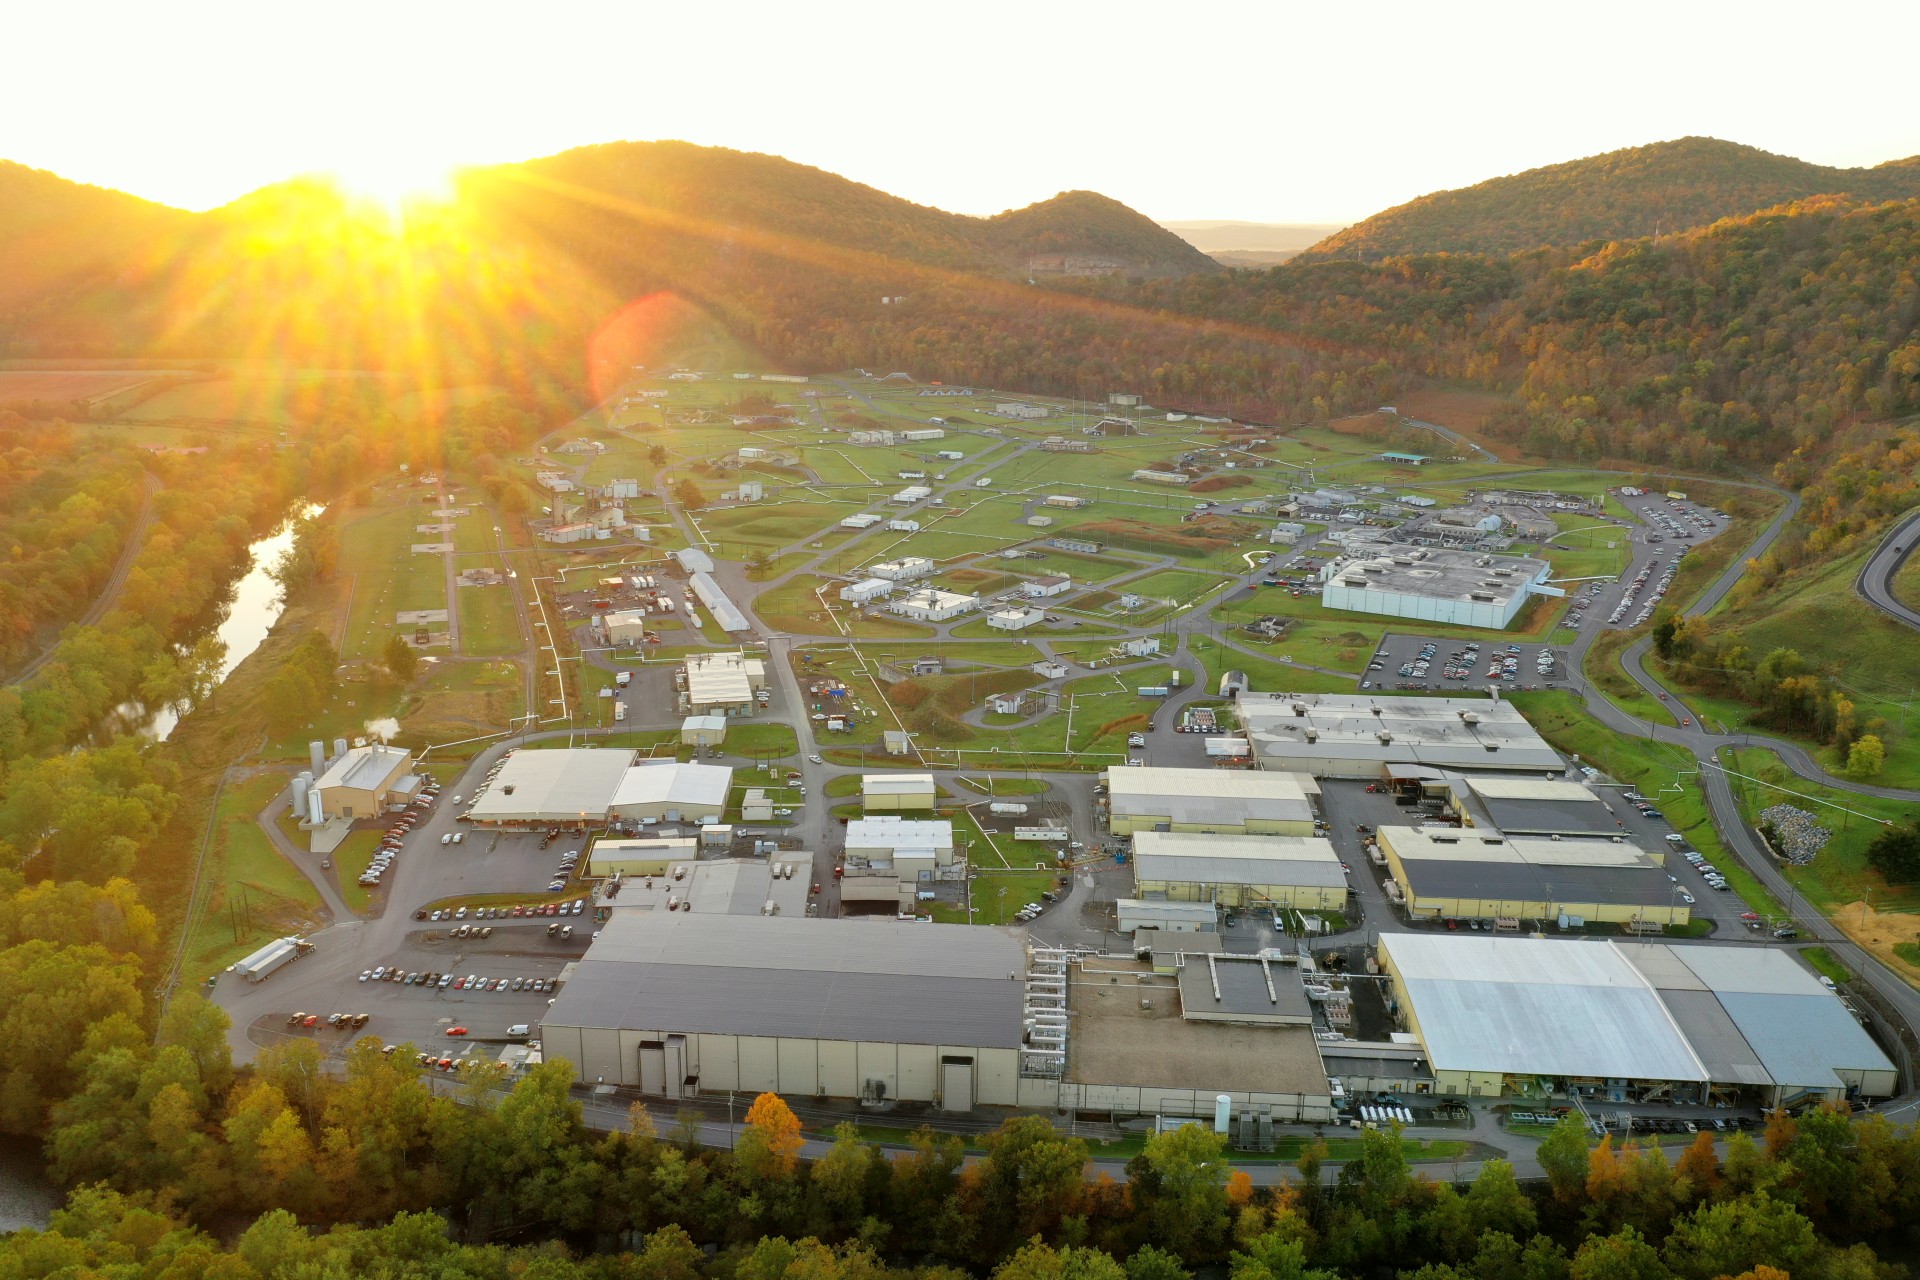 Allegany Ballistics Laboratory facility in West Virginia.